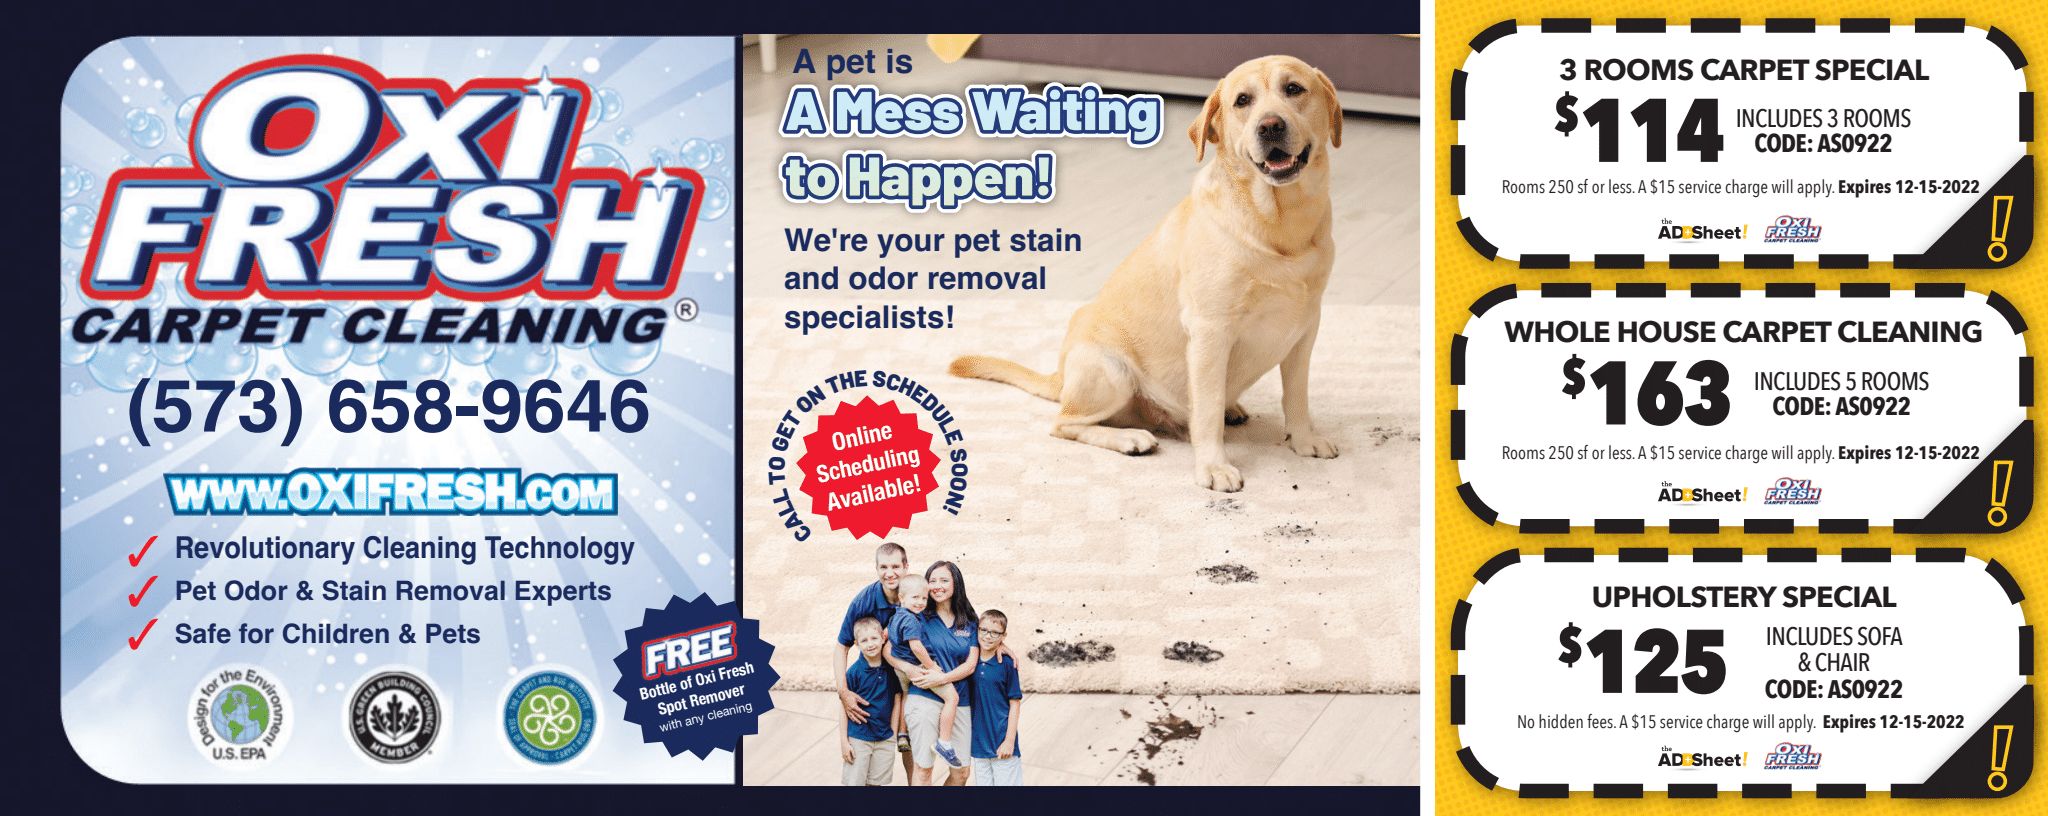 OXI FRESH CARPET CLEANING coupons thru 12/15/22 The Add Sheet!